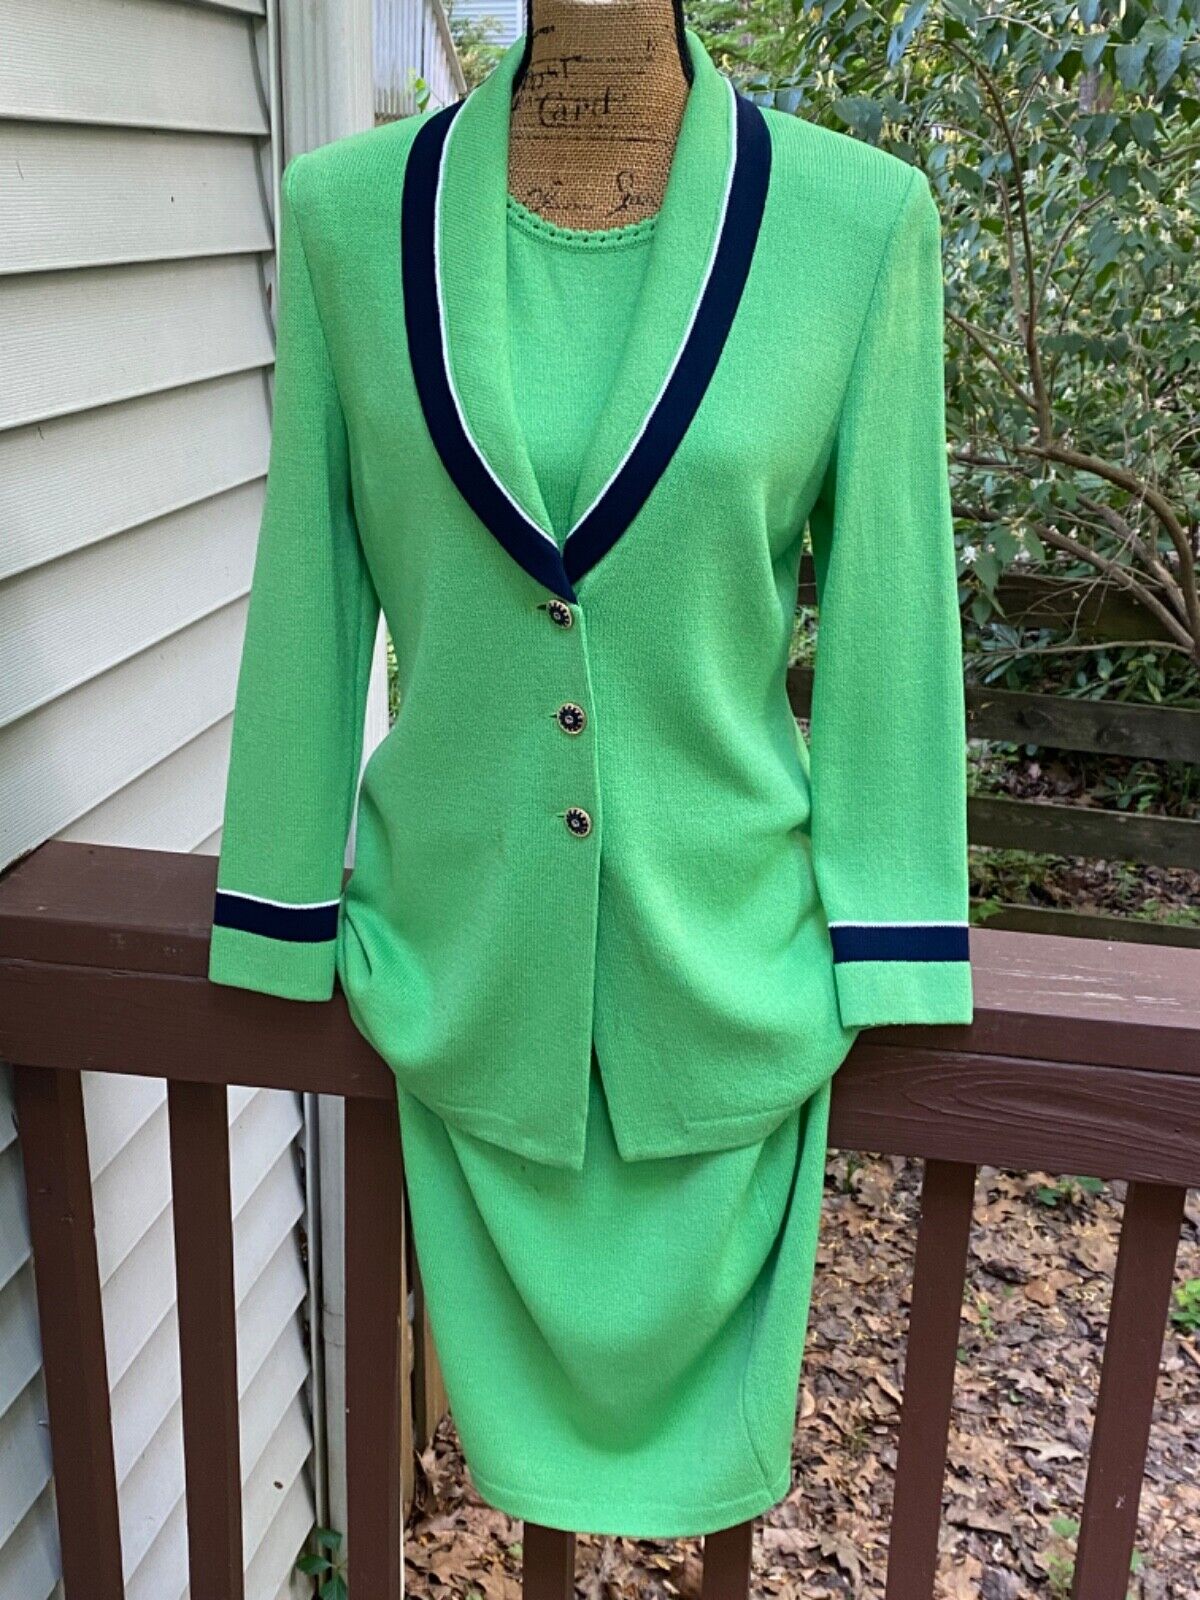 St. John Collection 3 pc. spring green multi Knit blazer skirt suit SZ 6/8-FLAWS